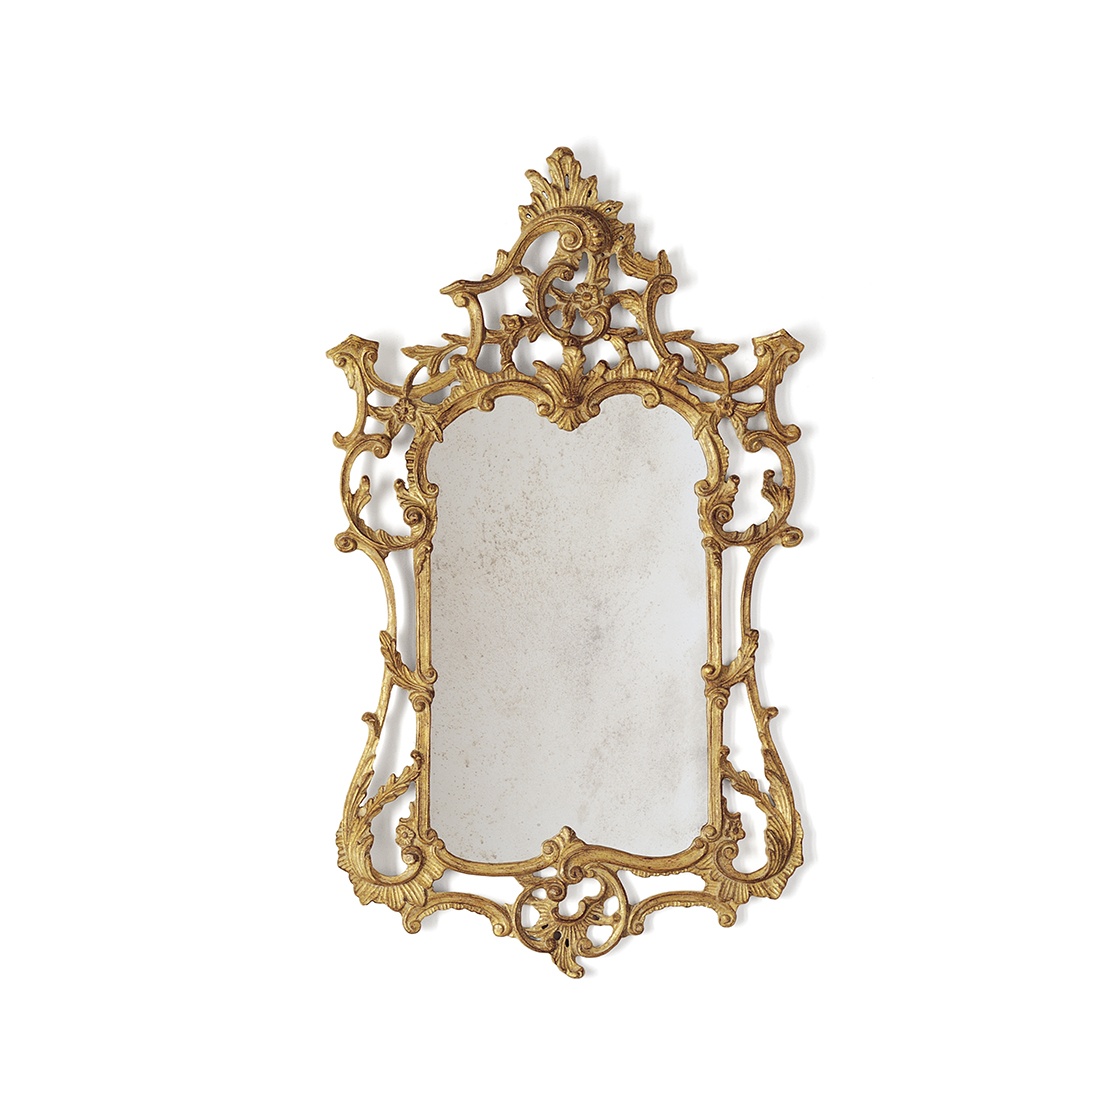 Rococo mirror in Burnt gold - Beaumont & Fletcher